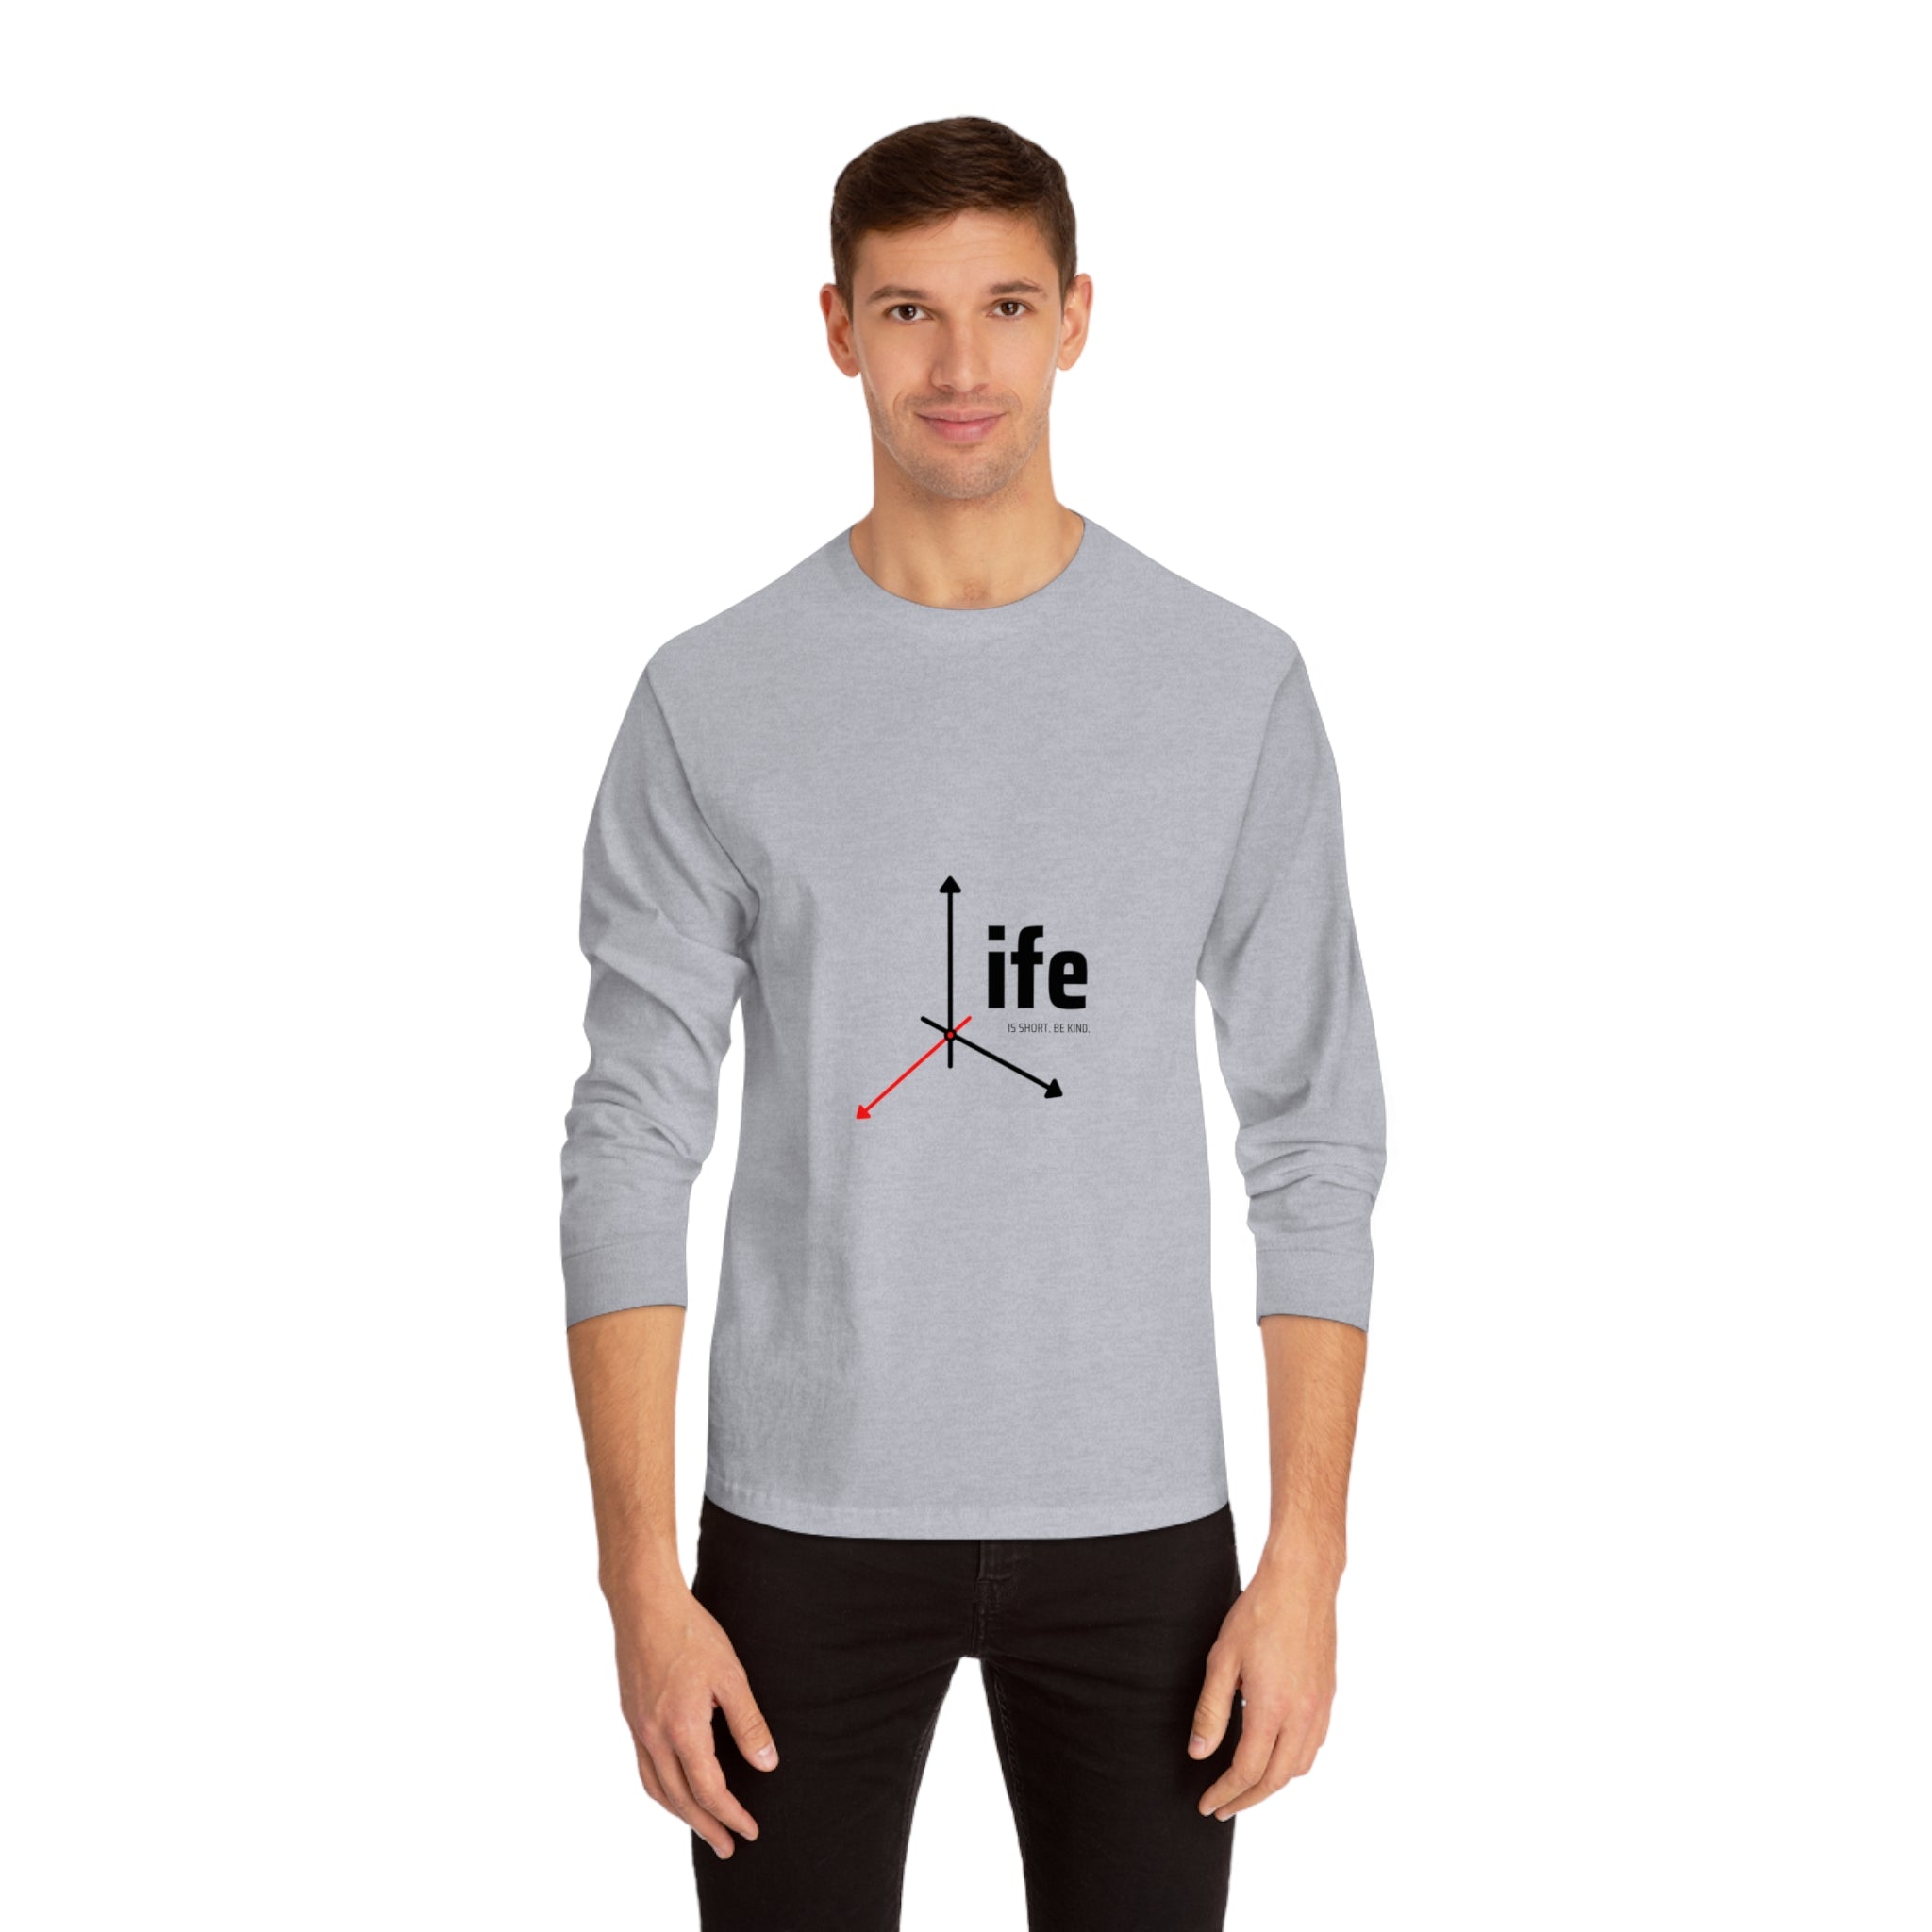 Life is Short Unisex Classic Long Sleeve T-Shirt